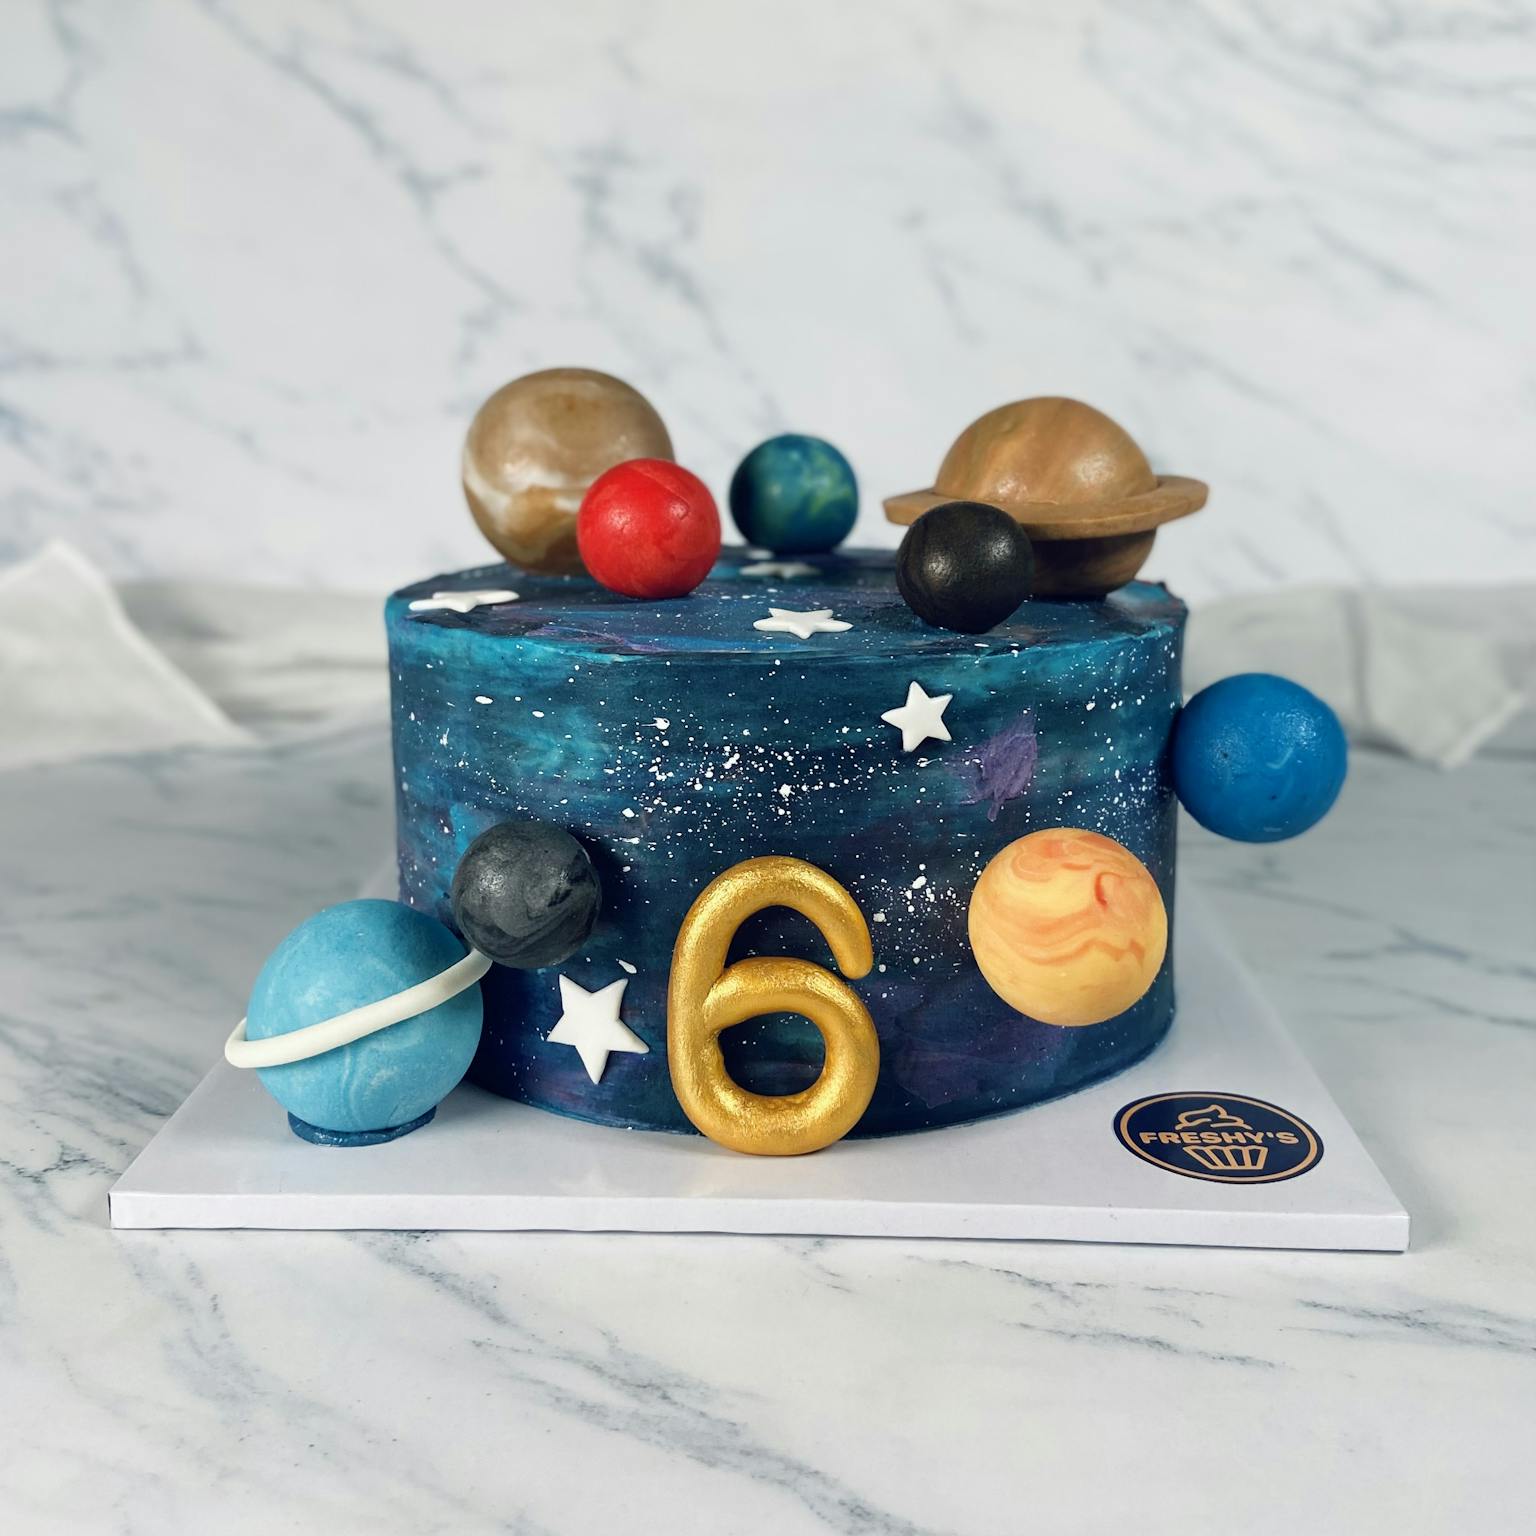 100% edible fondant sculpted galaxy cake